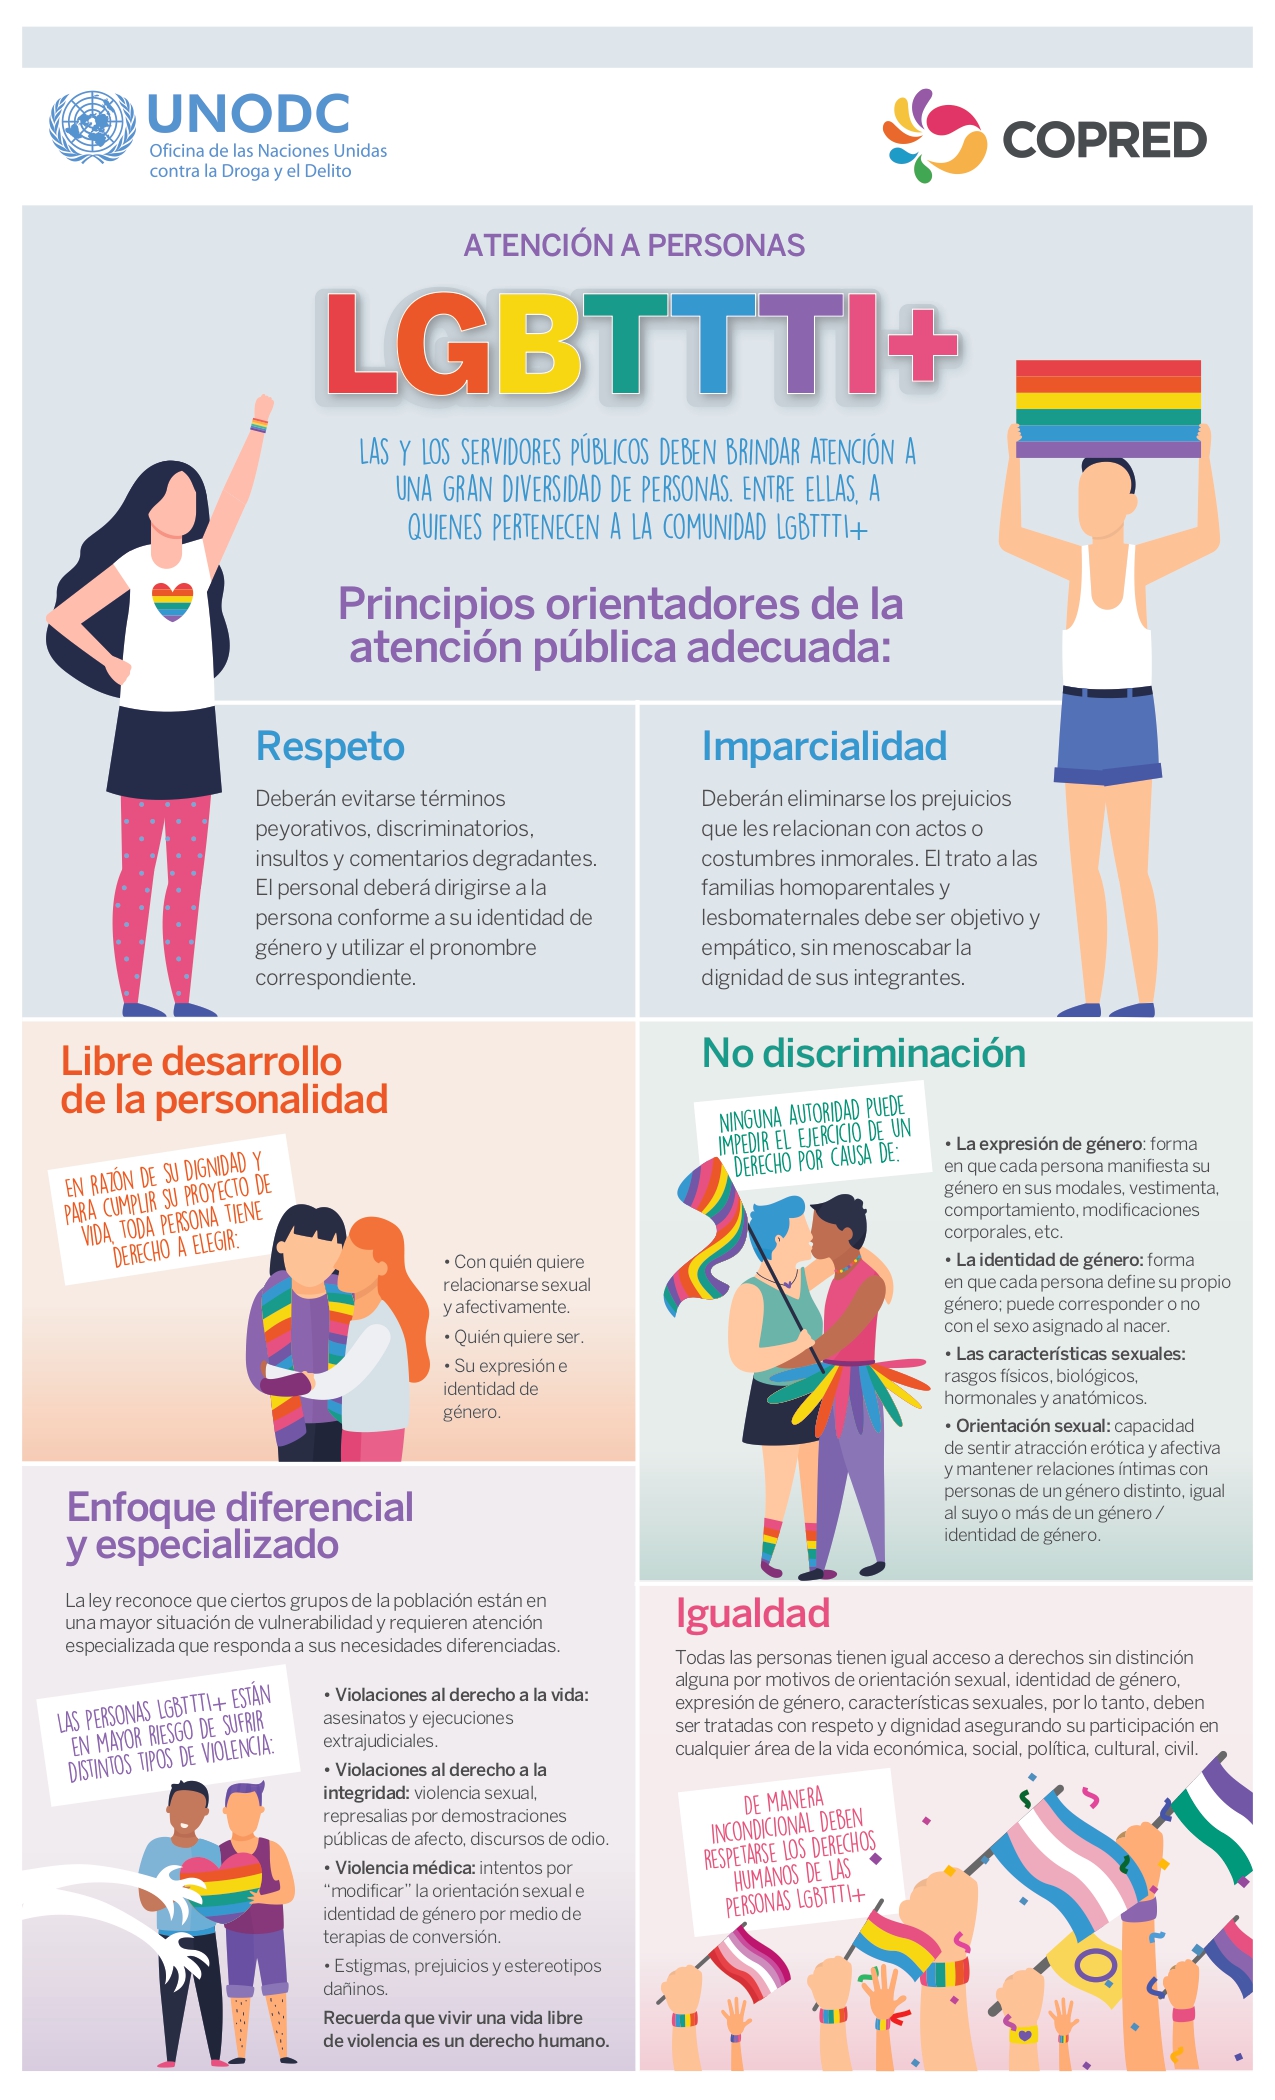 /lpomex/uploads/images/Campañas/JusticiaSinDiscriminacion/INFOGRAFIA_ATENCION_LGBTIII_page-0001.jpg